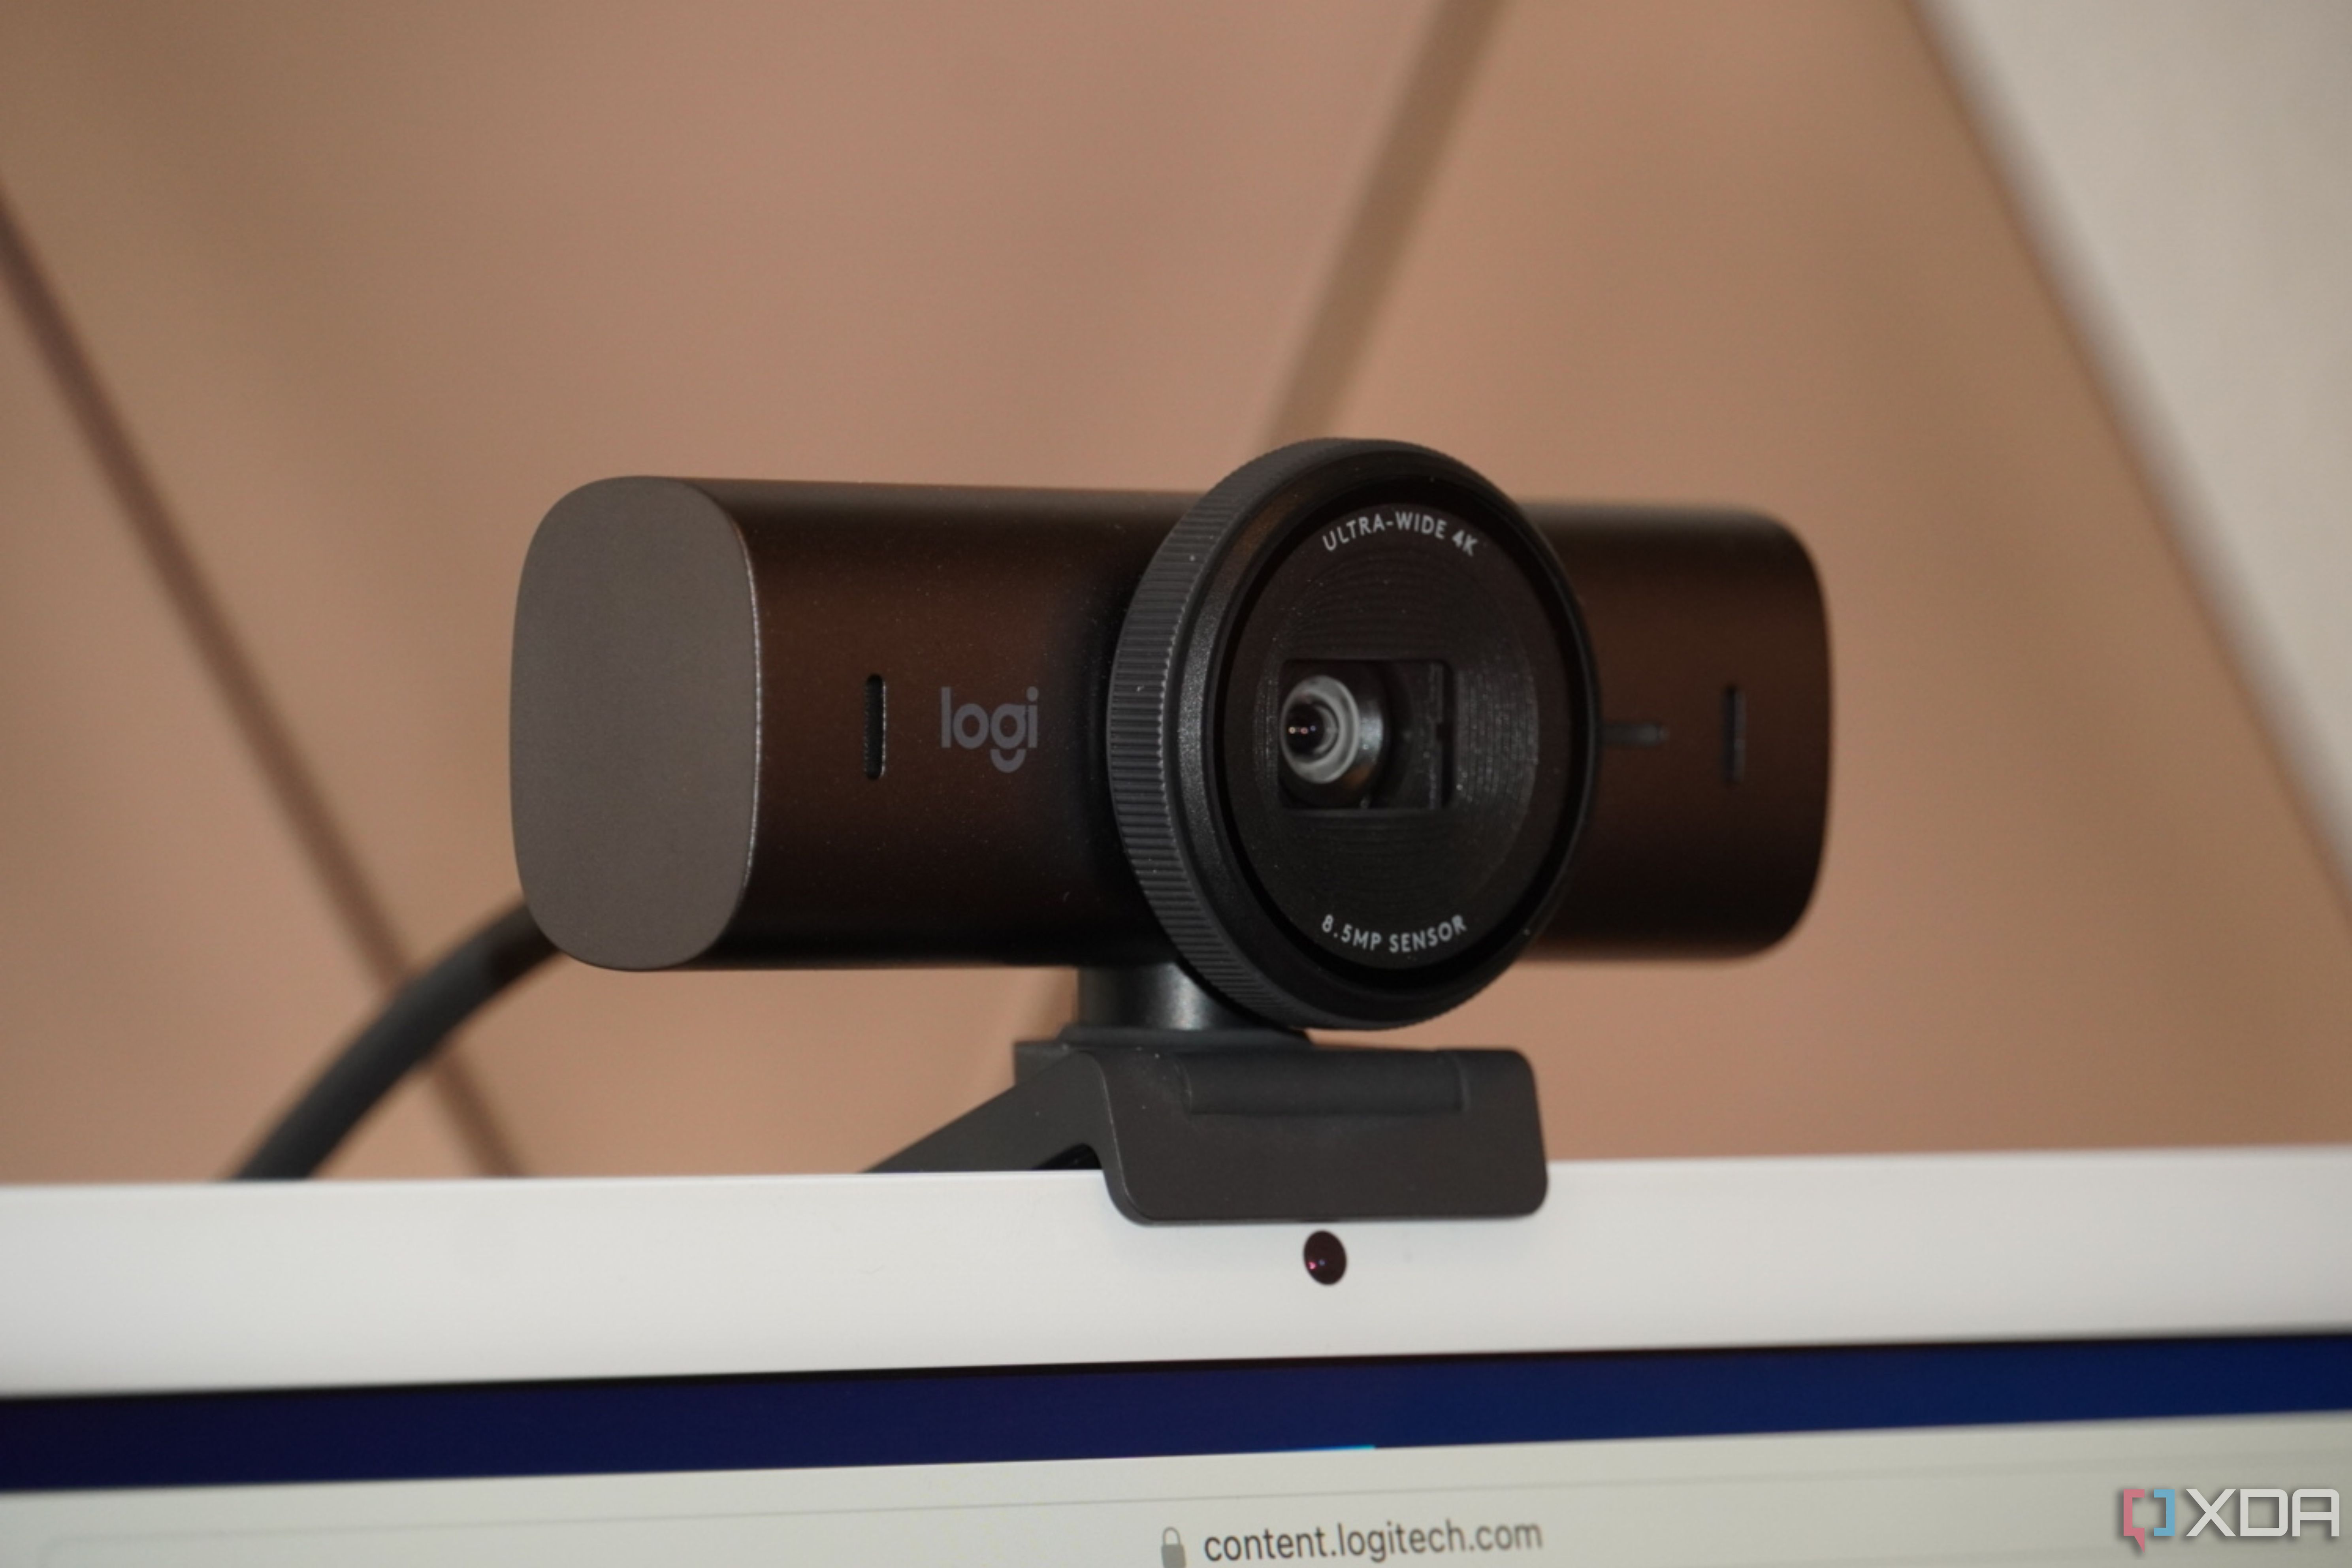 The Logitech MX Brio webcam mounted atop an iMac.